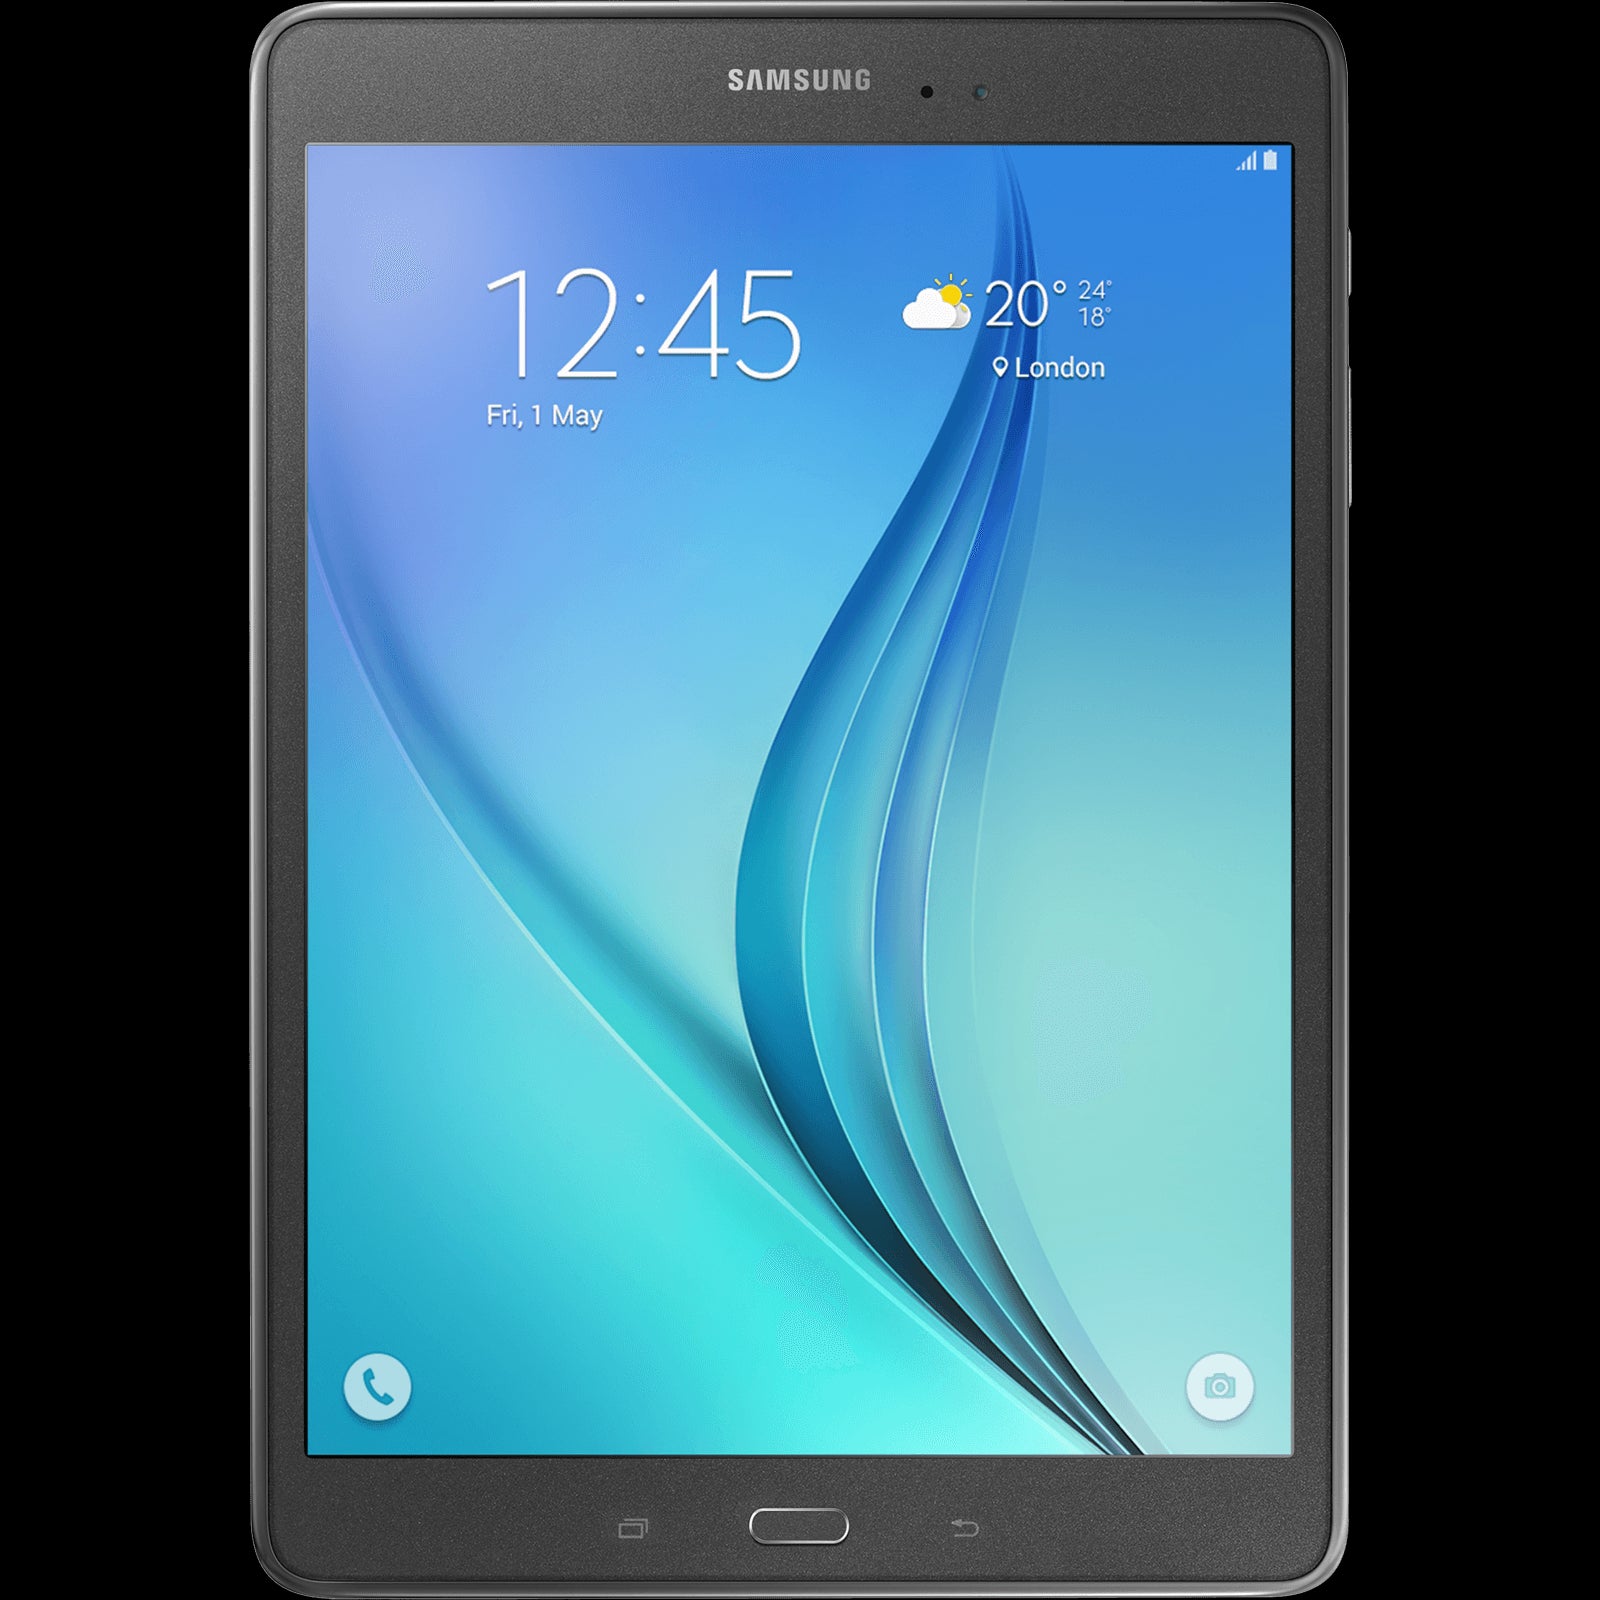 Samsung Galaxy Tab A 9.7, SM-T550, 16GB, Smoky Titanium - Refurbished Good